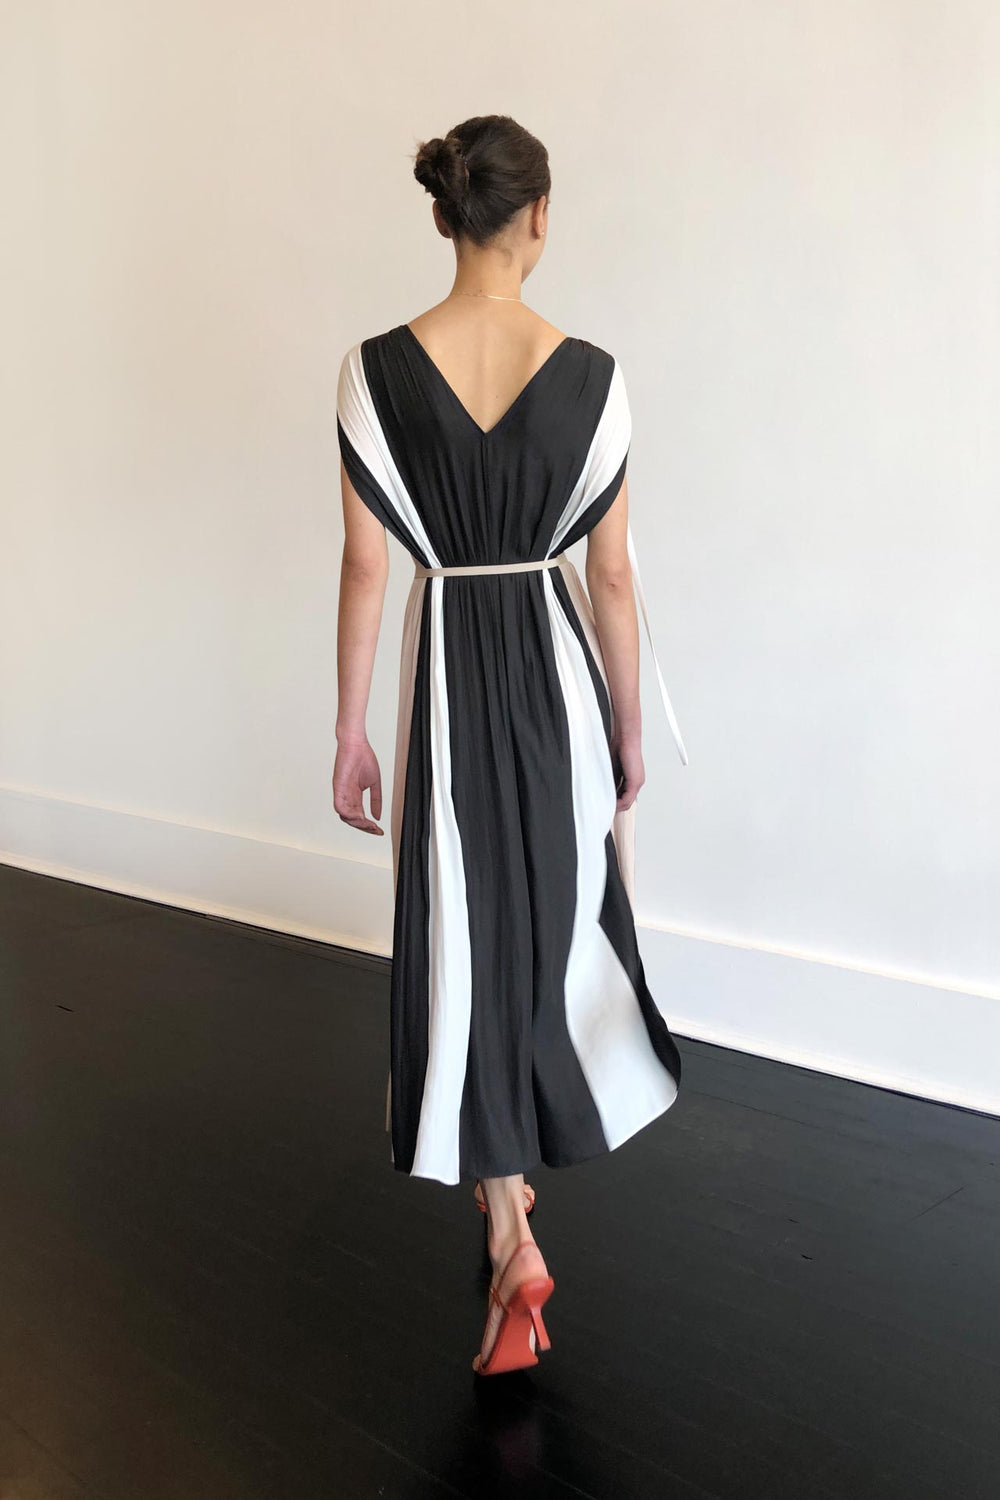 Fashion Designer CARL KAPP collection | Bel Air Onesize Fits All Dress Charcoal | Sydney Australia